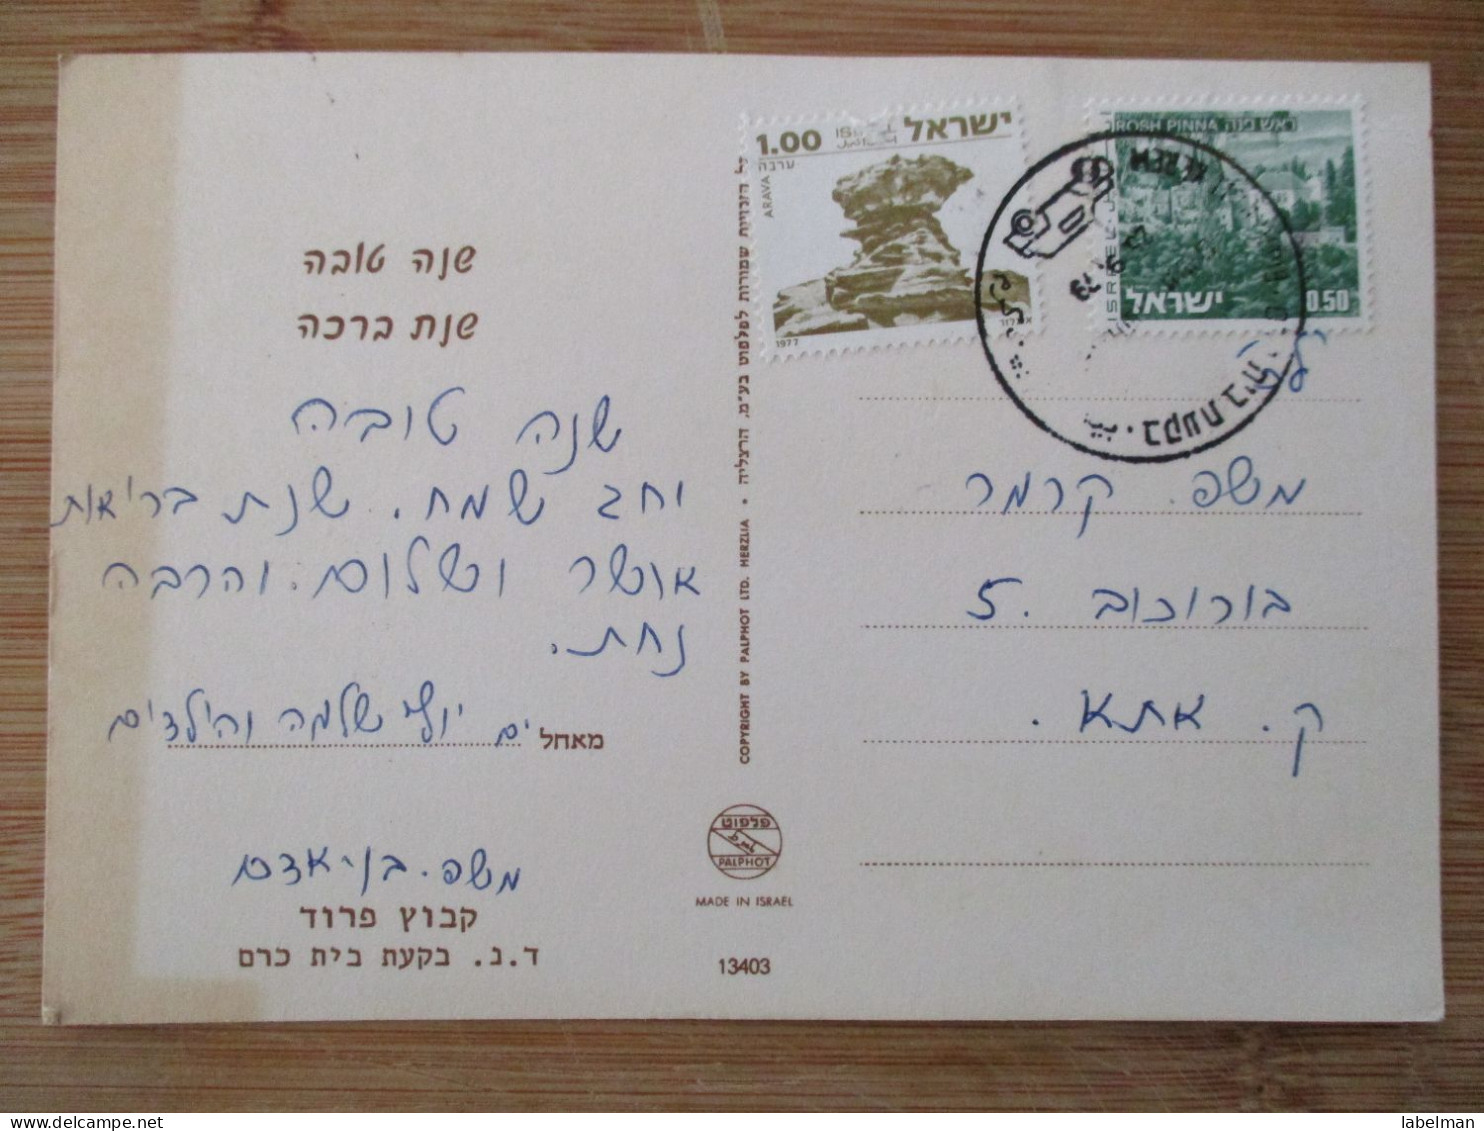 ISRAEL UPPER GALILEE KIBBUTZ PAROD SHANA TOVA NEW YEAR CARD POSTCARD CARTE POSTALE ANSICHTSKARTE CARTOLINA POSTKARTE - Israel